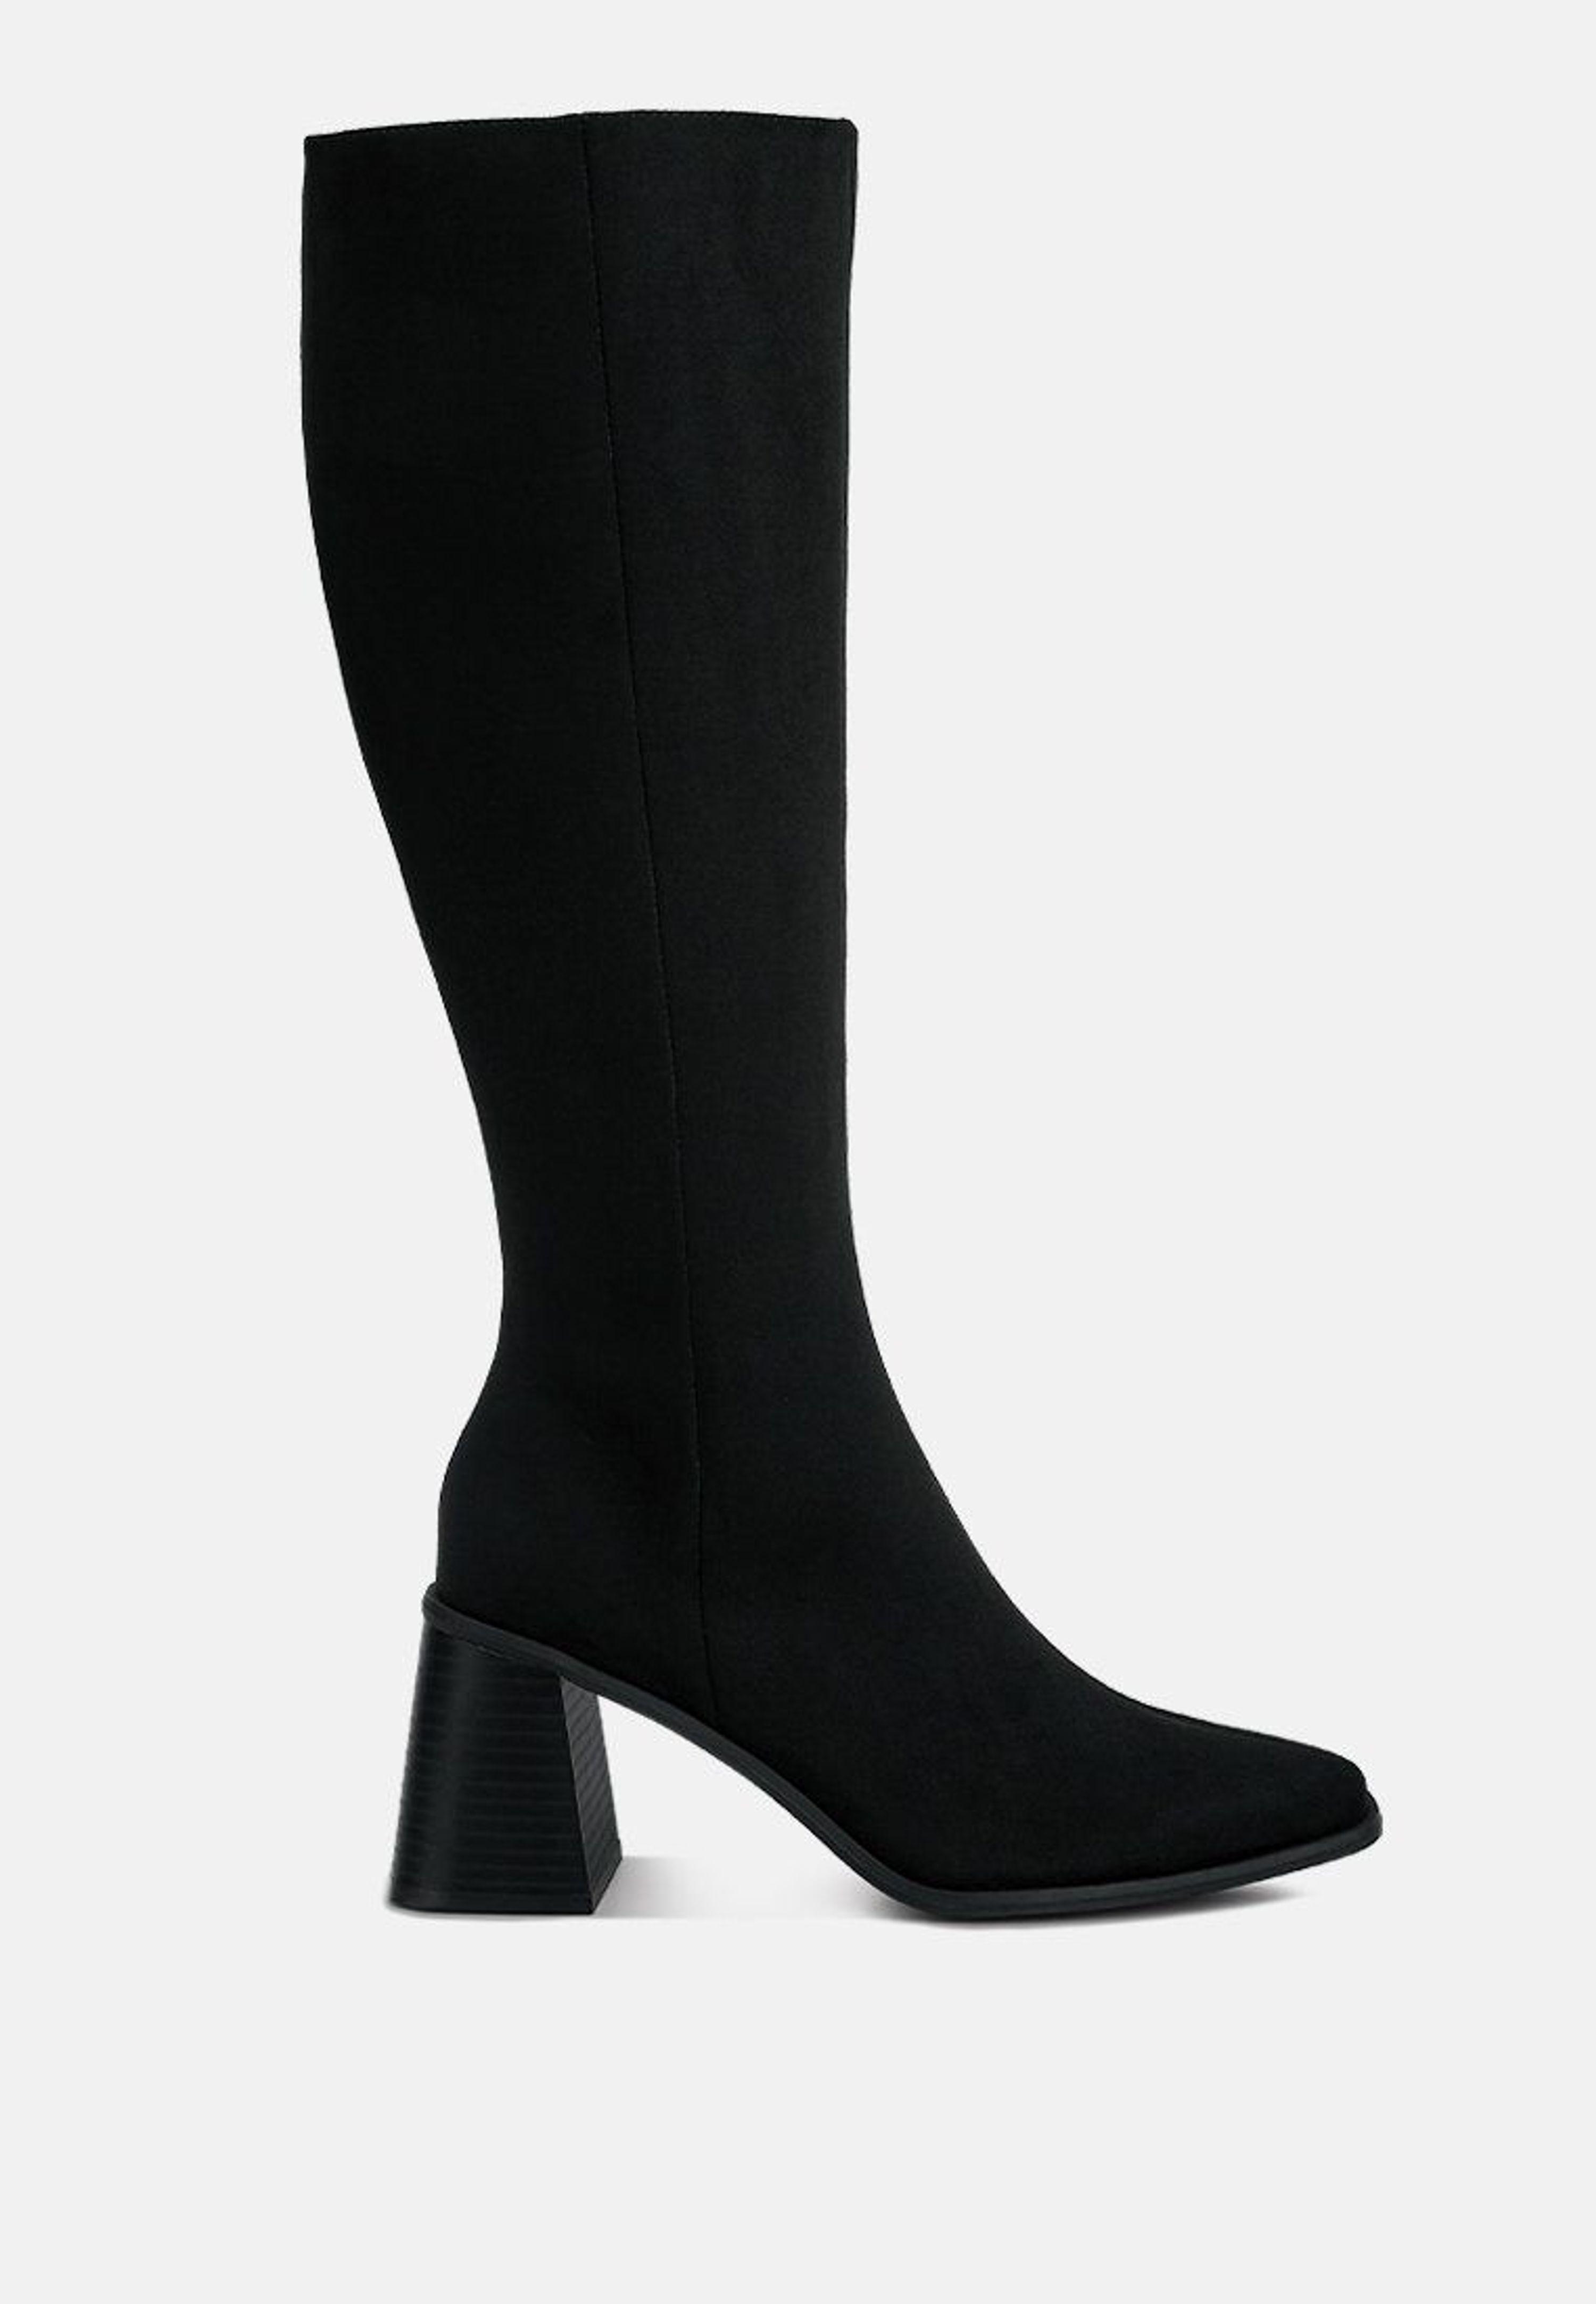 LONDON RAG Paytin Faux Leather Block Heel Calf Length Boots in Black | Lyst